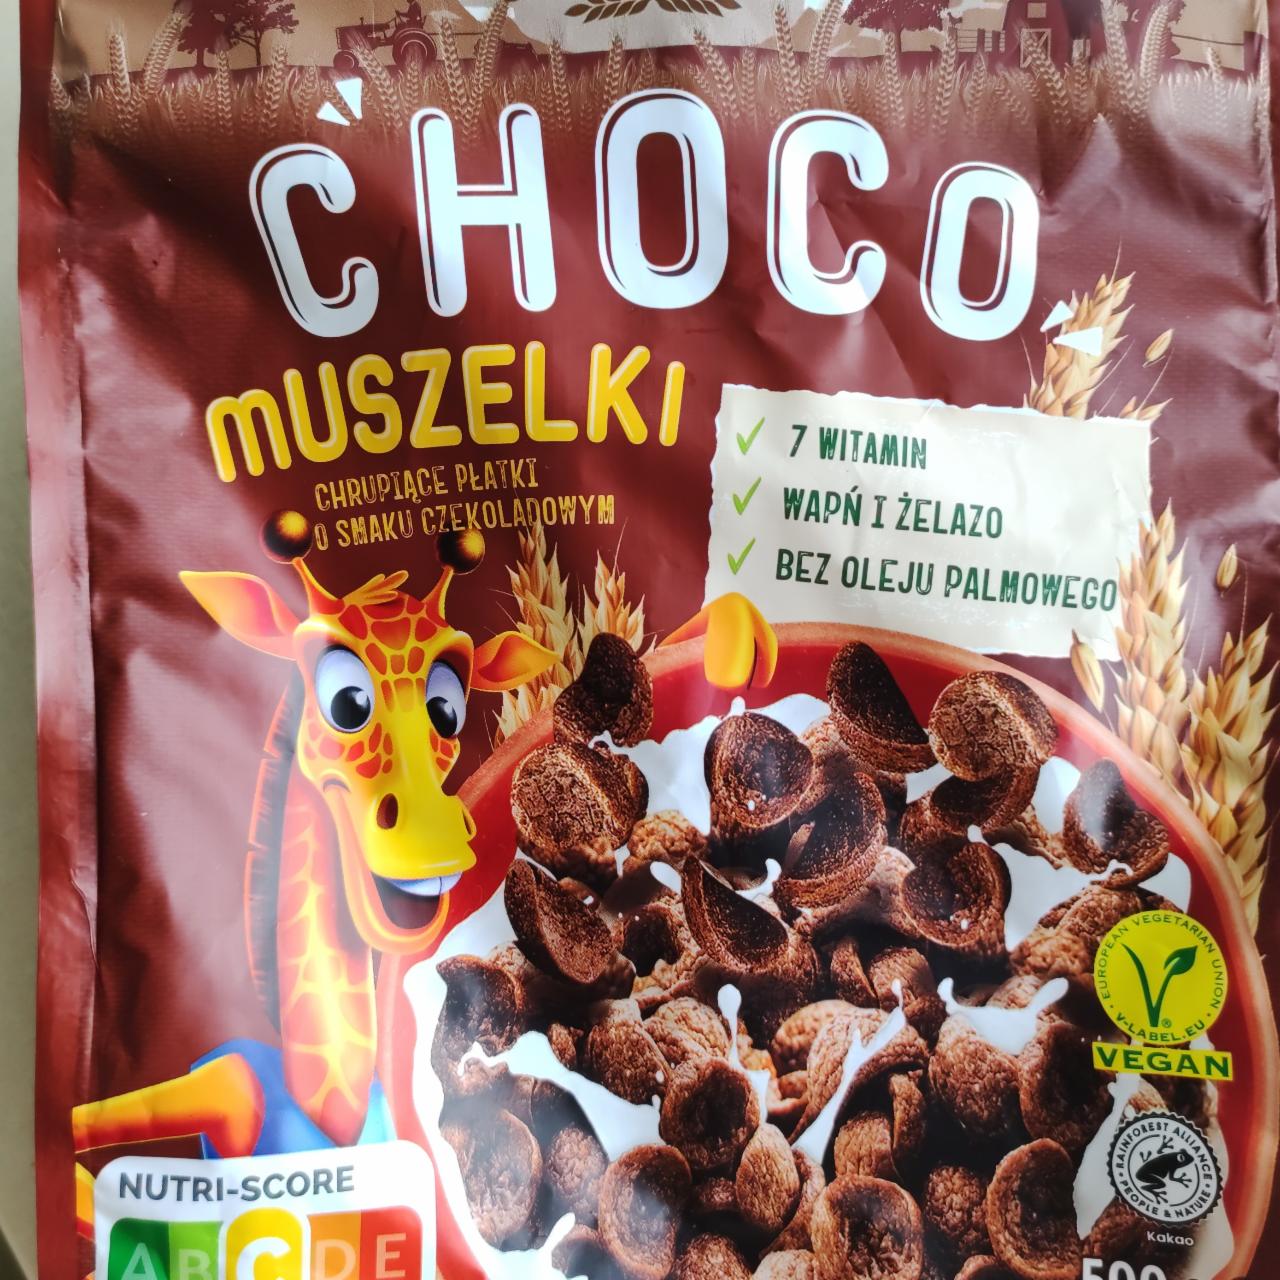 Фото - Пластівці шоколадні Choco Muszelki Crownfield